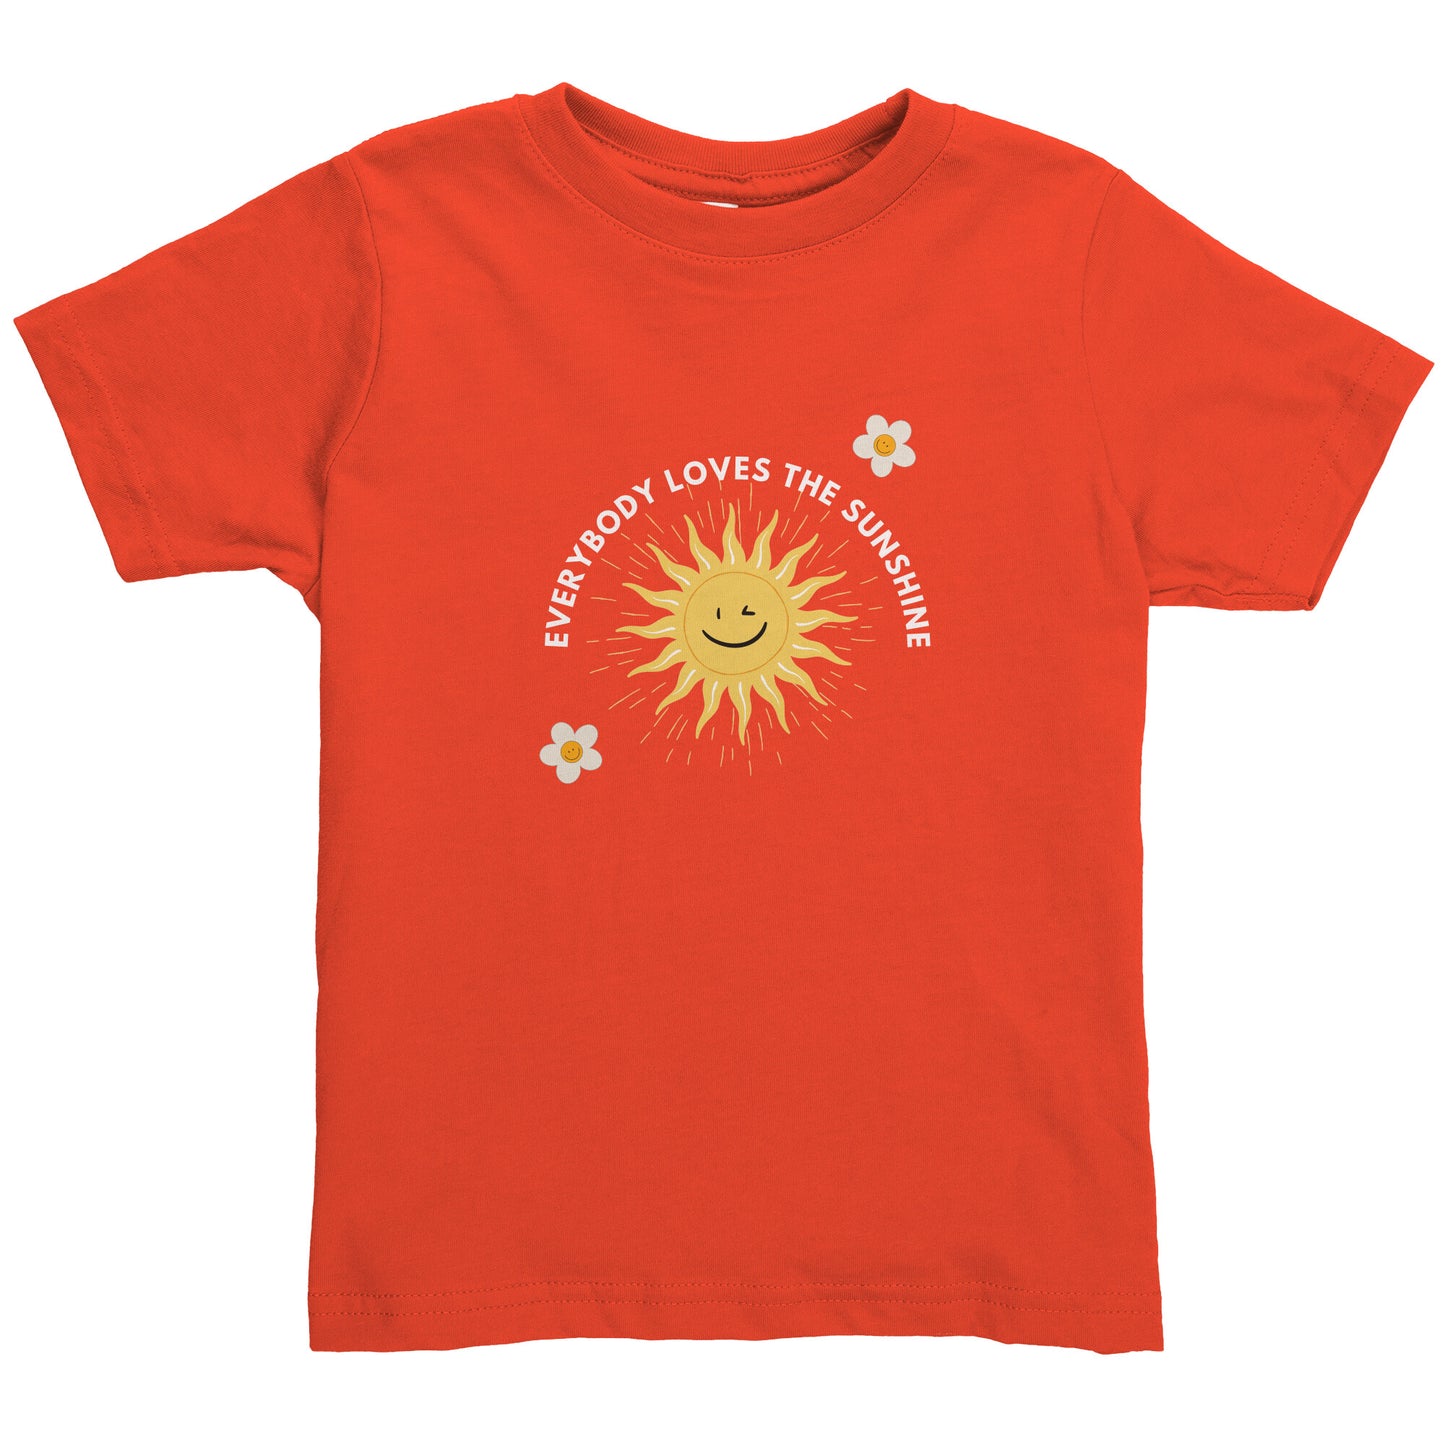 Loving sunshine toddler T-shirt